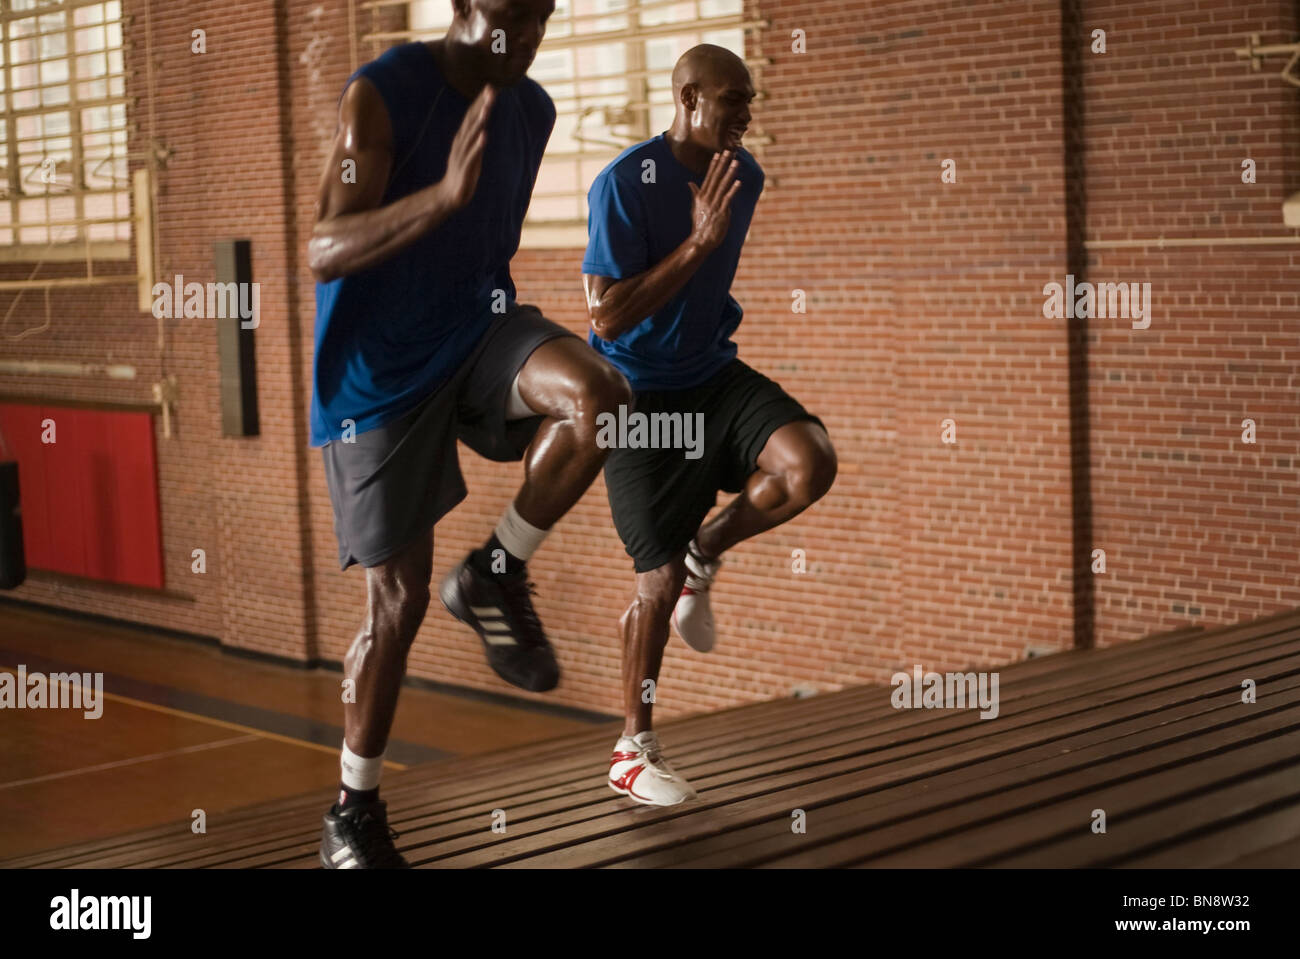 Basketball players running on bleachers Stock Photo